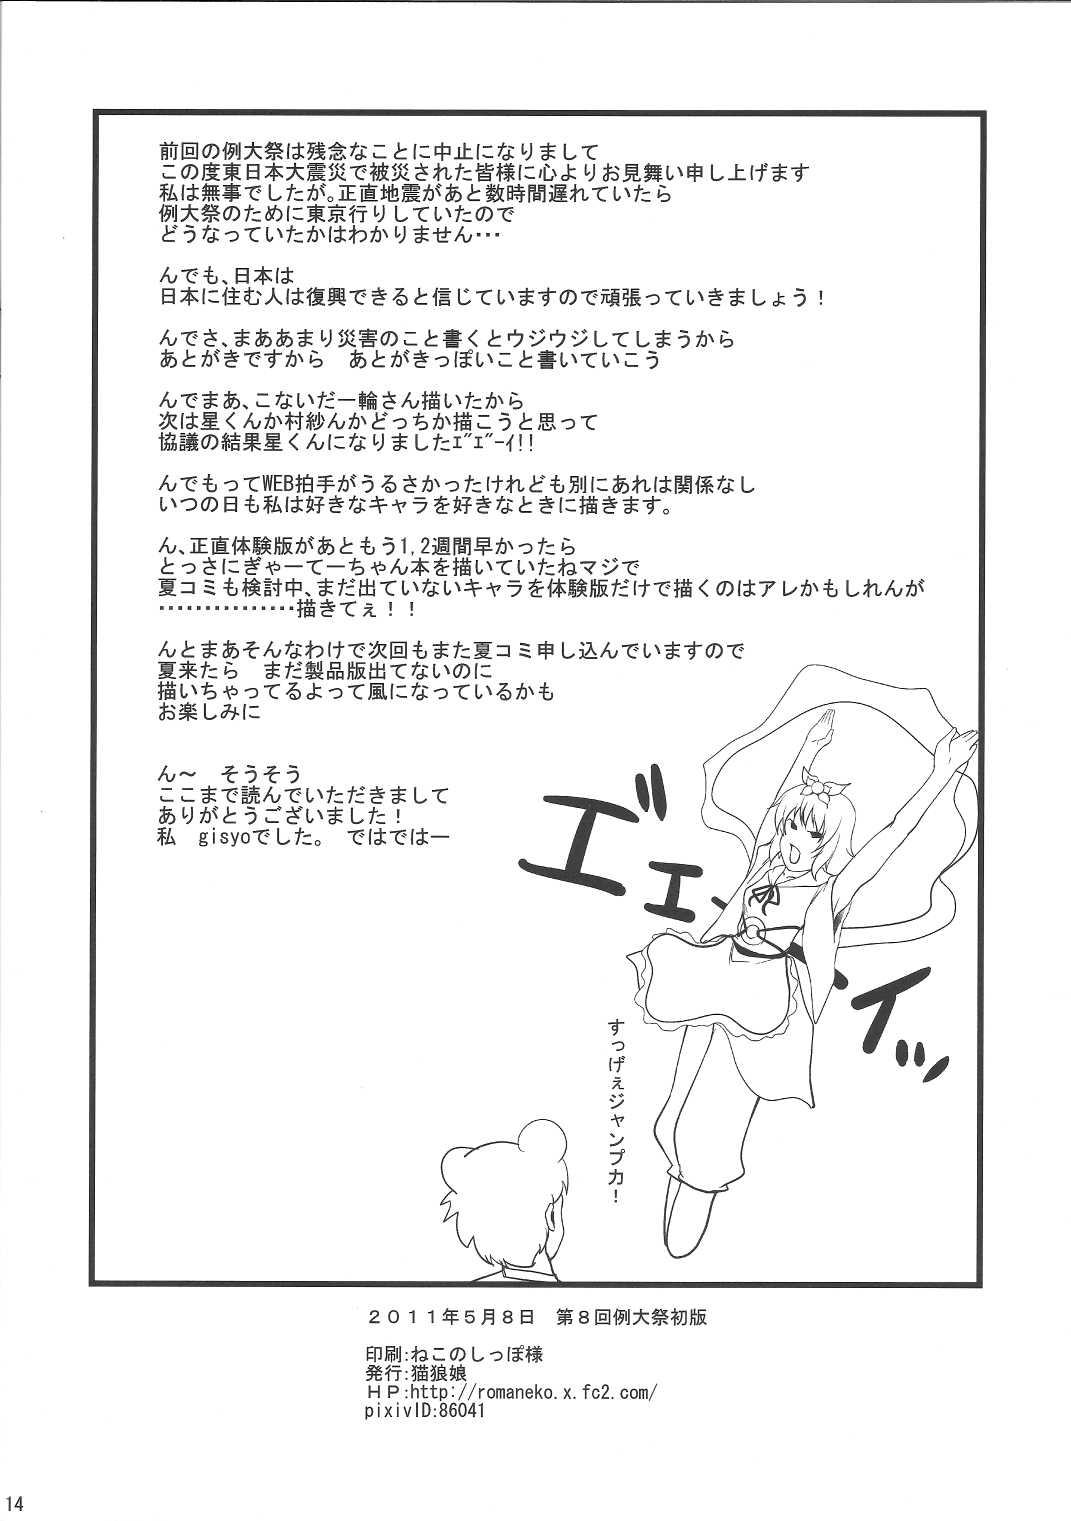 (Reitaisai 8EX) [Neko Ookami Musume (gisyo)] Jouyoku no Tora - Tiger of passion (Touhou Project) (例大祭8EX) [猫狼娘] 情欲の寅 Tiger of passion (東方Project)